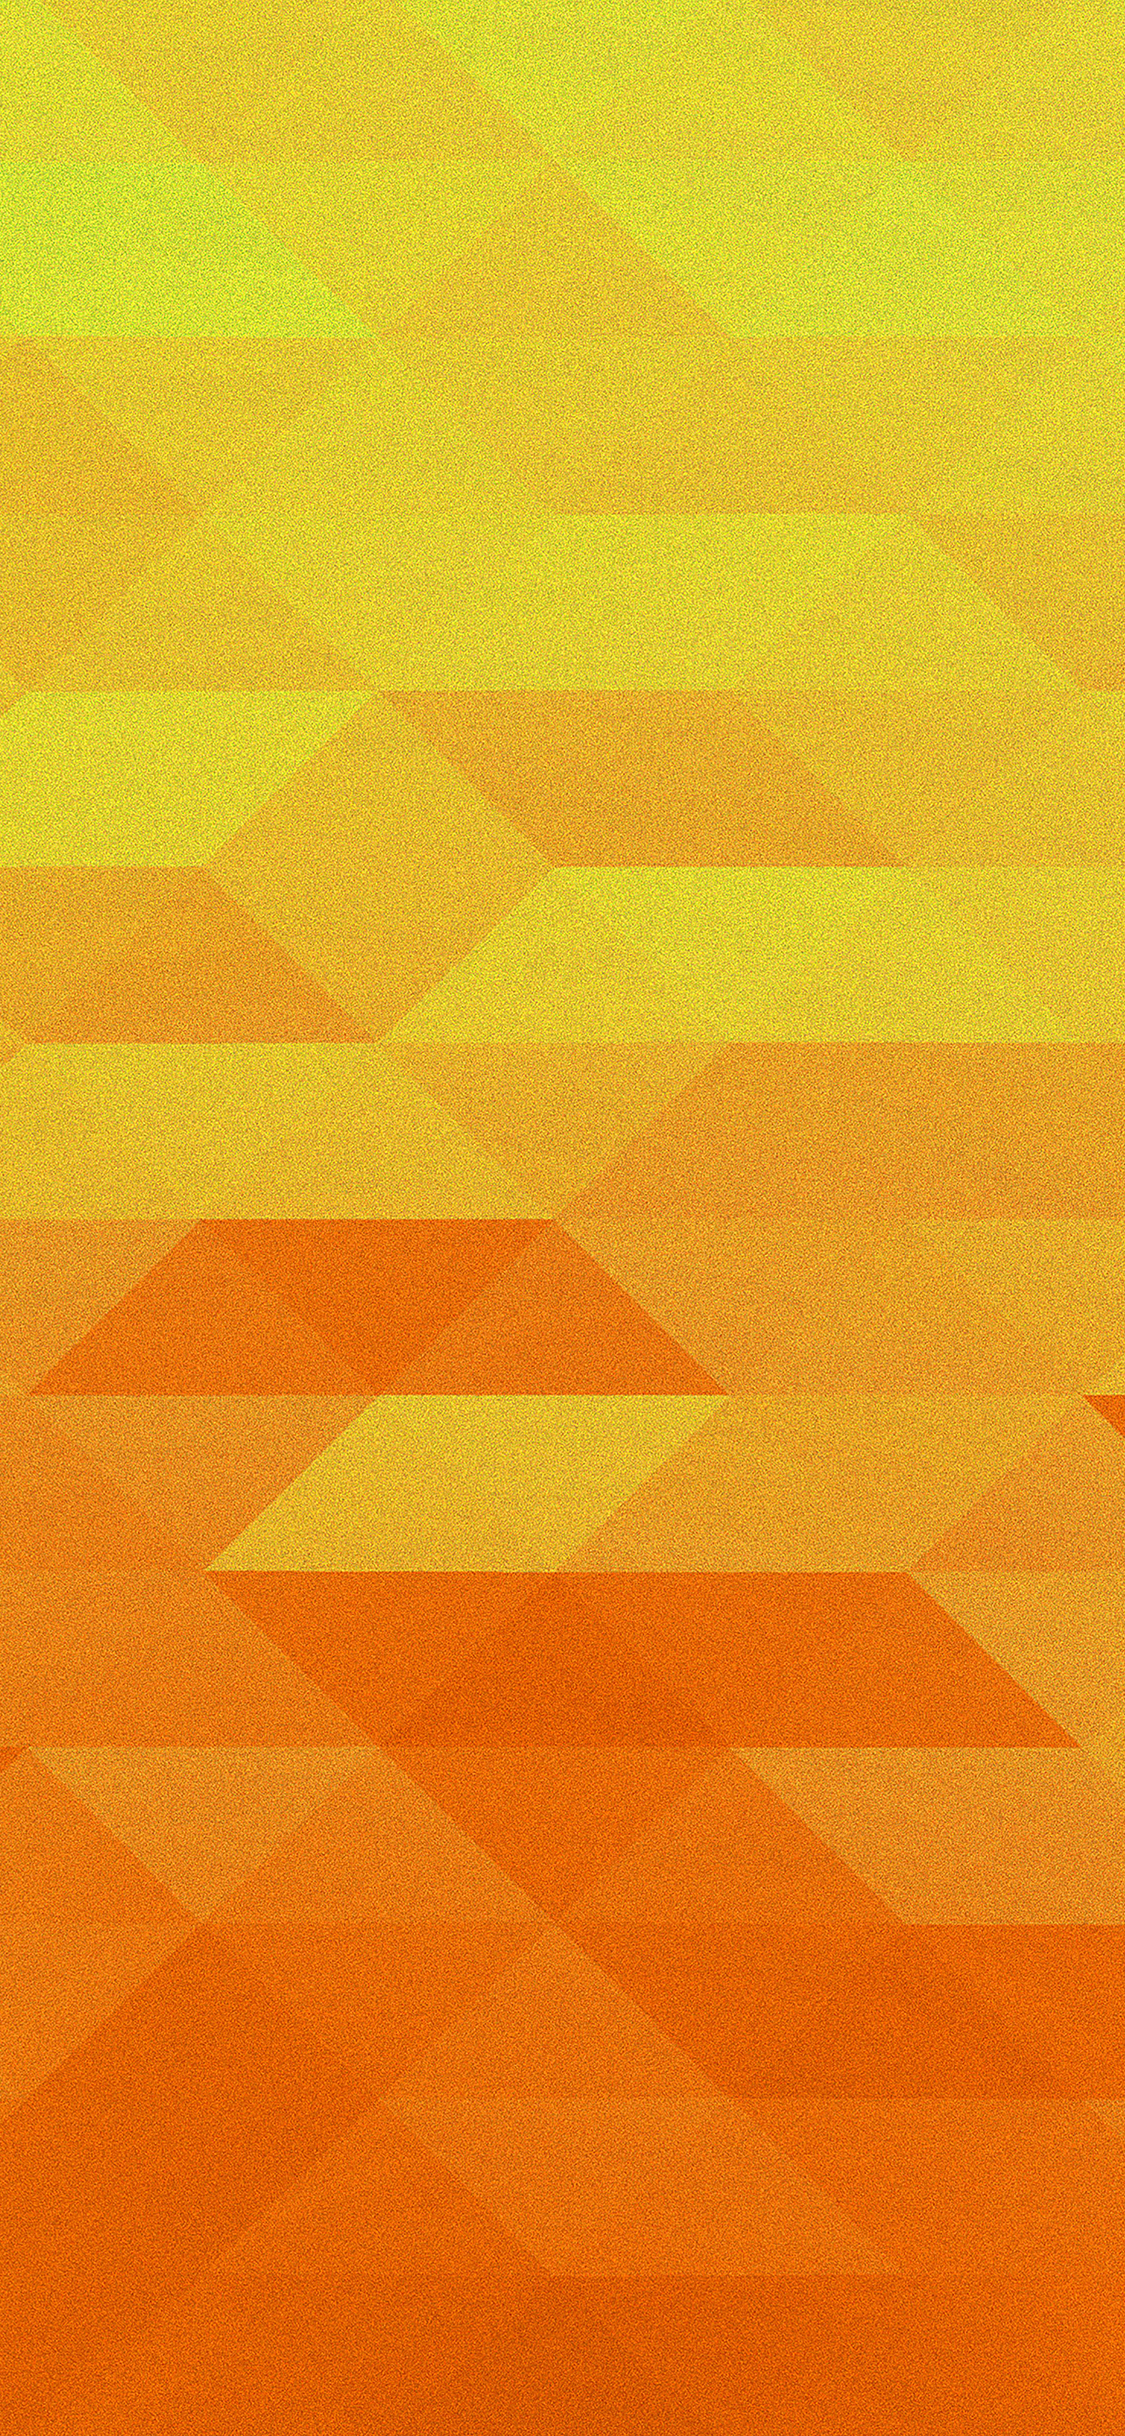 1125x2436 | iPhone11 wallpaper | va38-orange-yellow-patterns